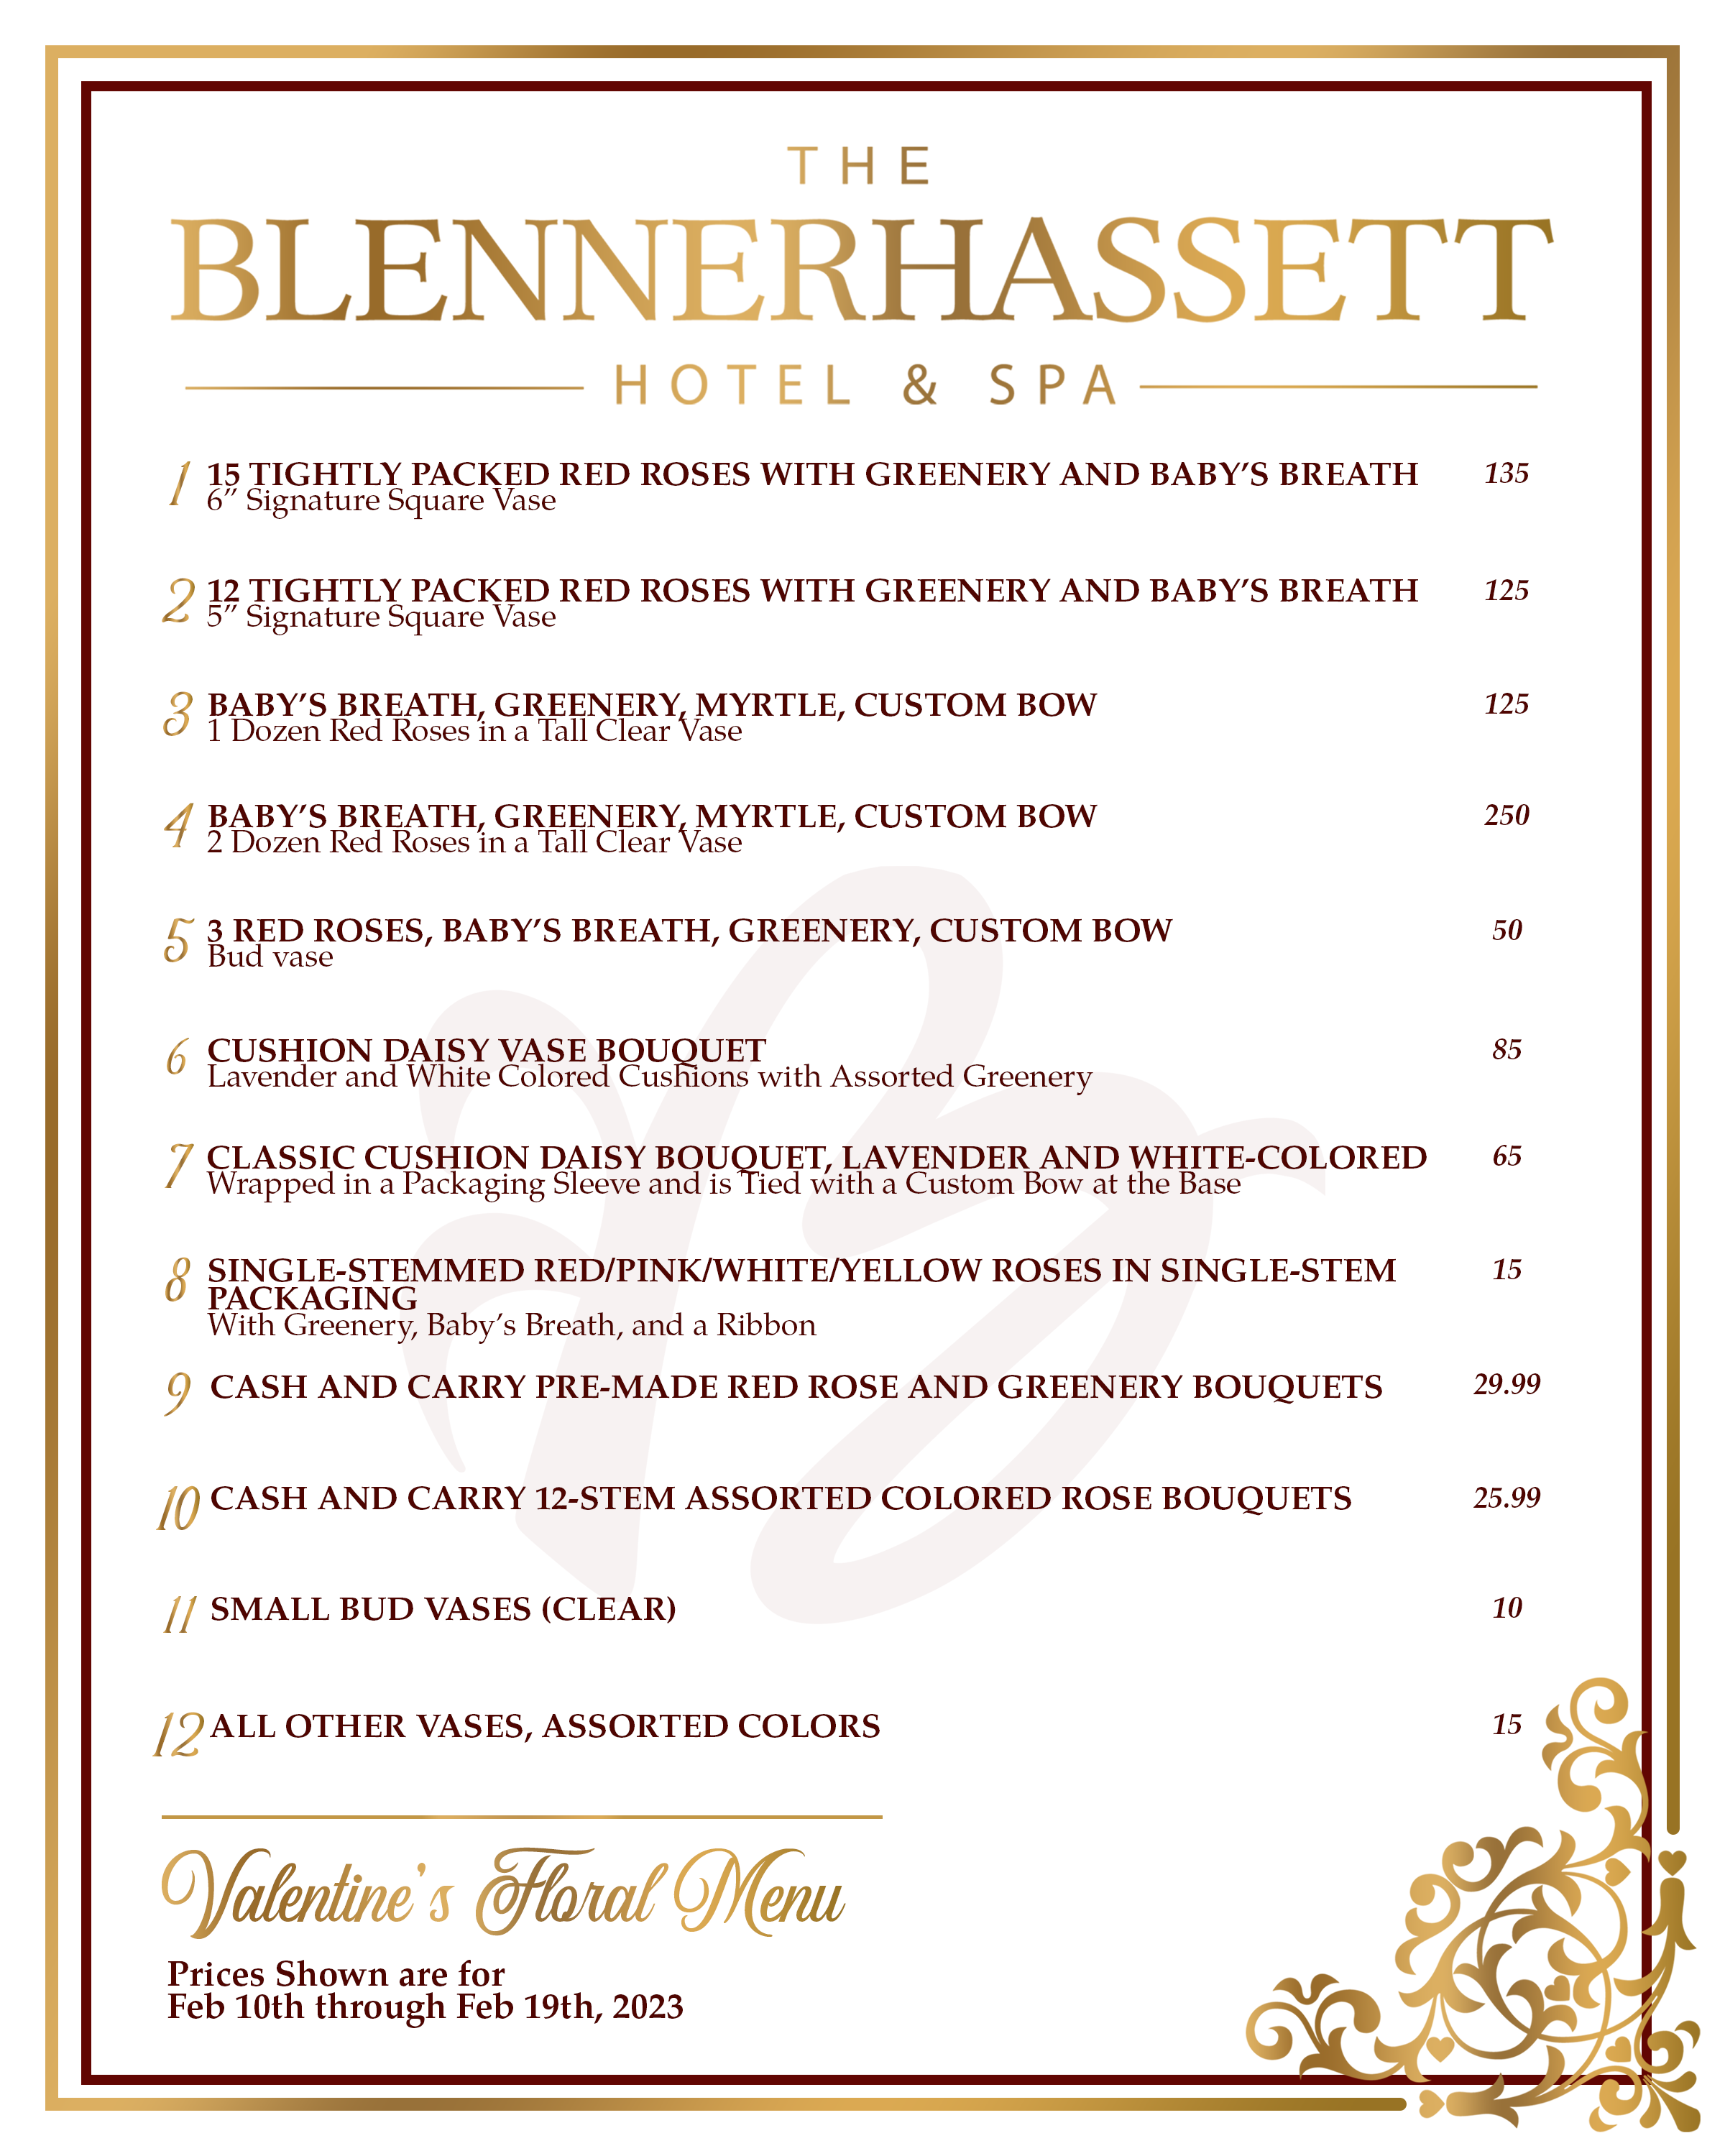 Blennerhassett Hotel and Spa Valentine's Floral Menu